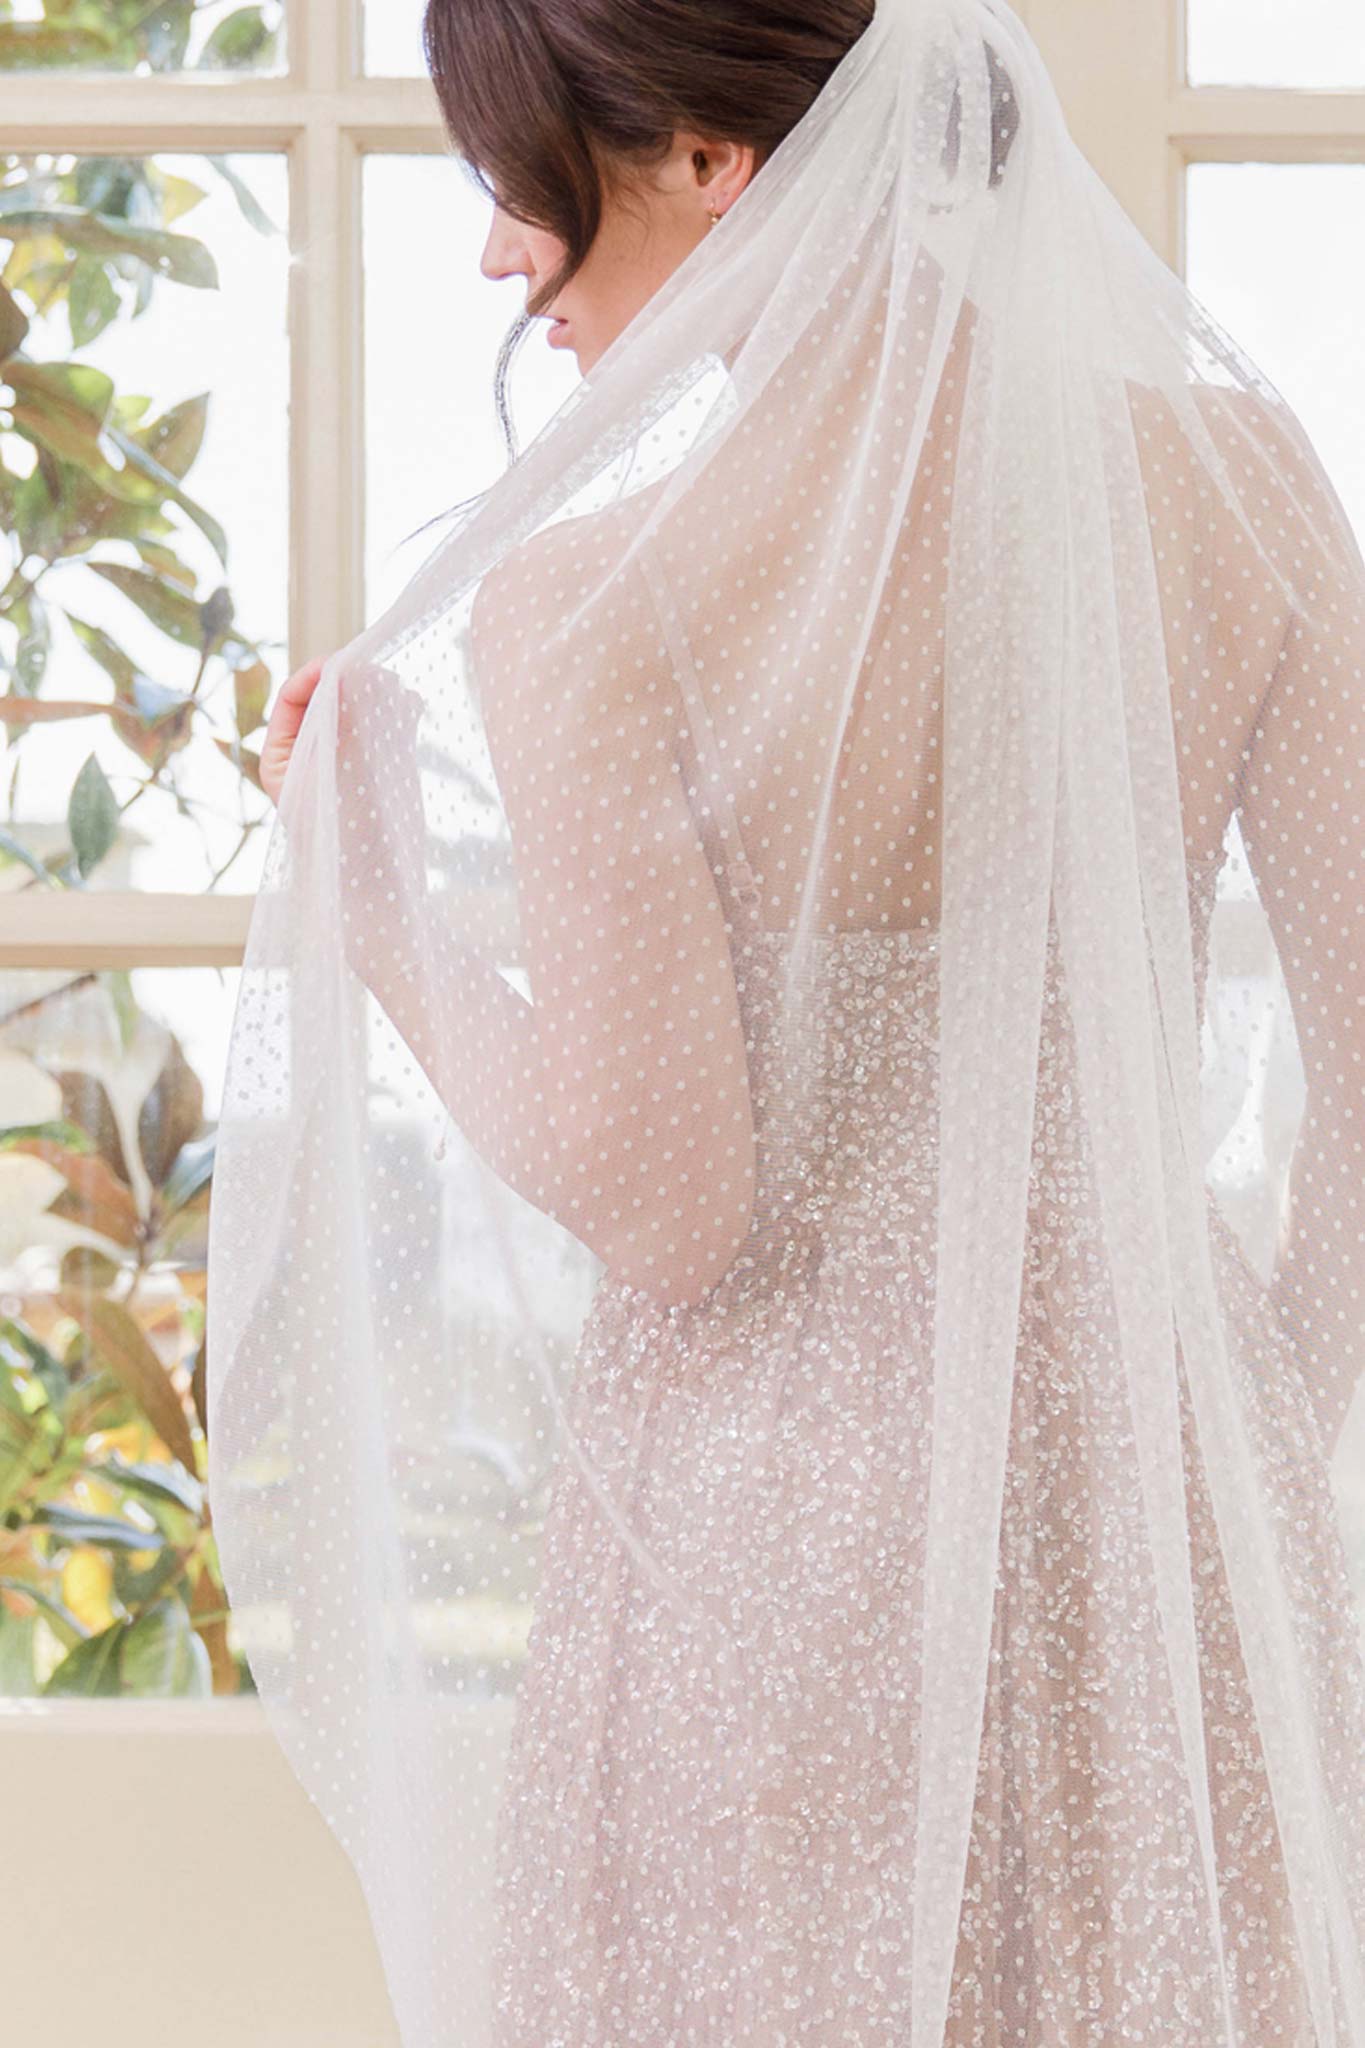 Wedding Veil Polka dot silk style tulle wedding veil - 'Dot'